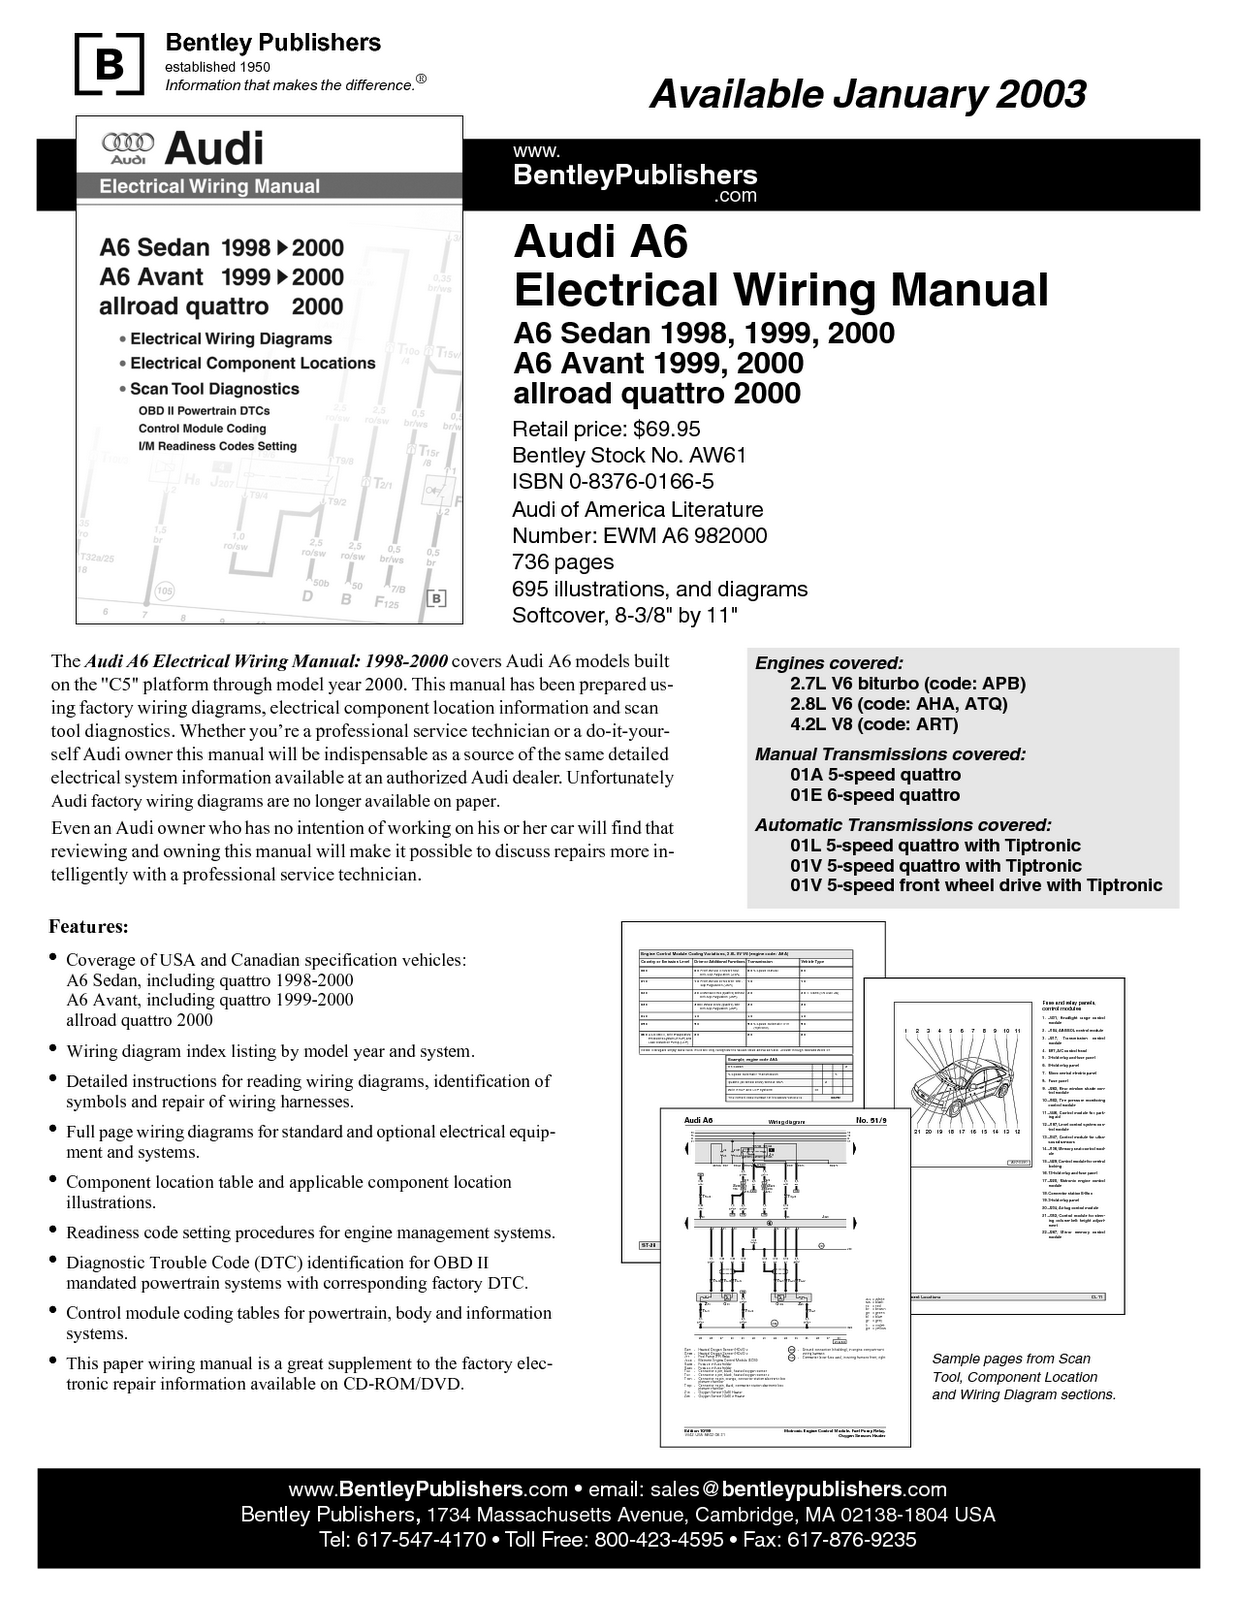 Electrical Wiring Manual 2003 Audi A6